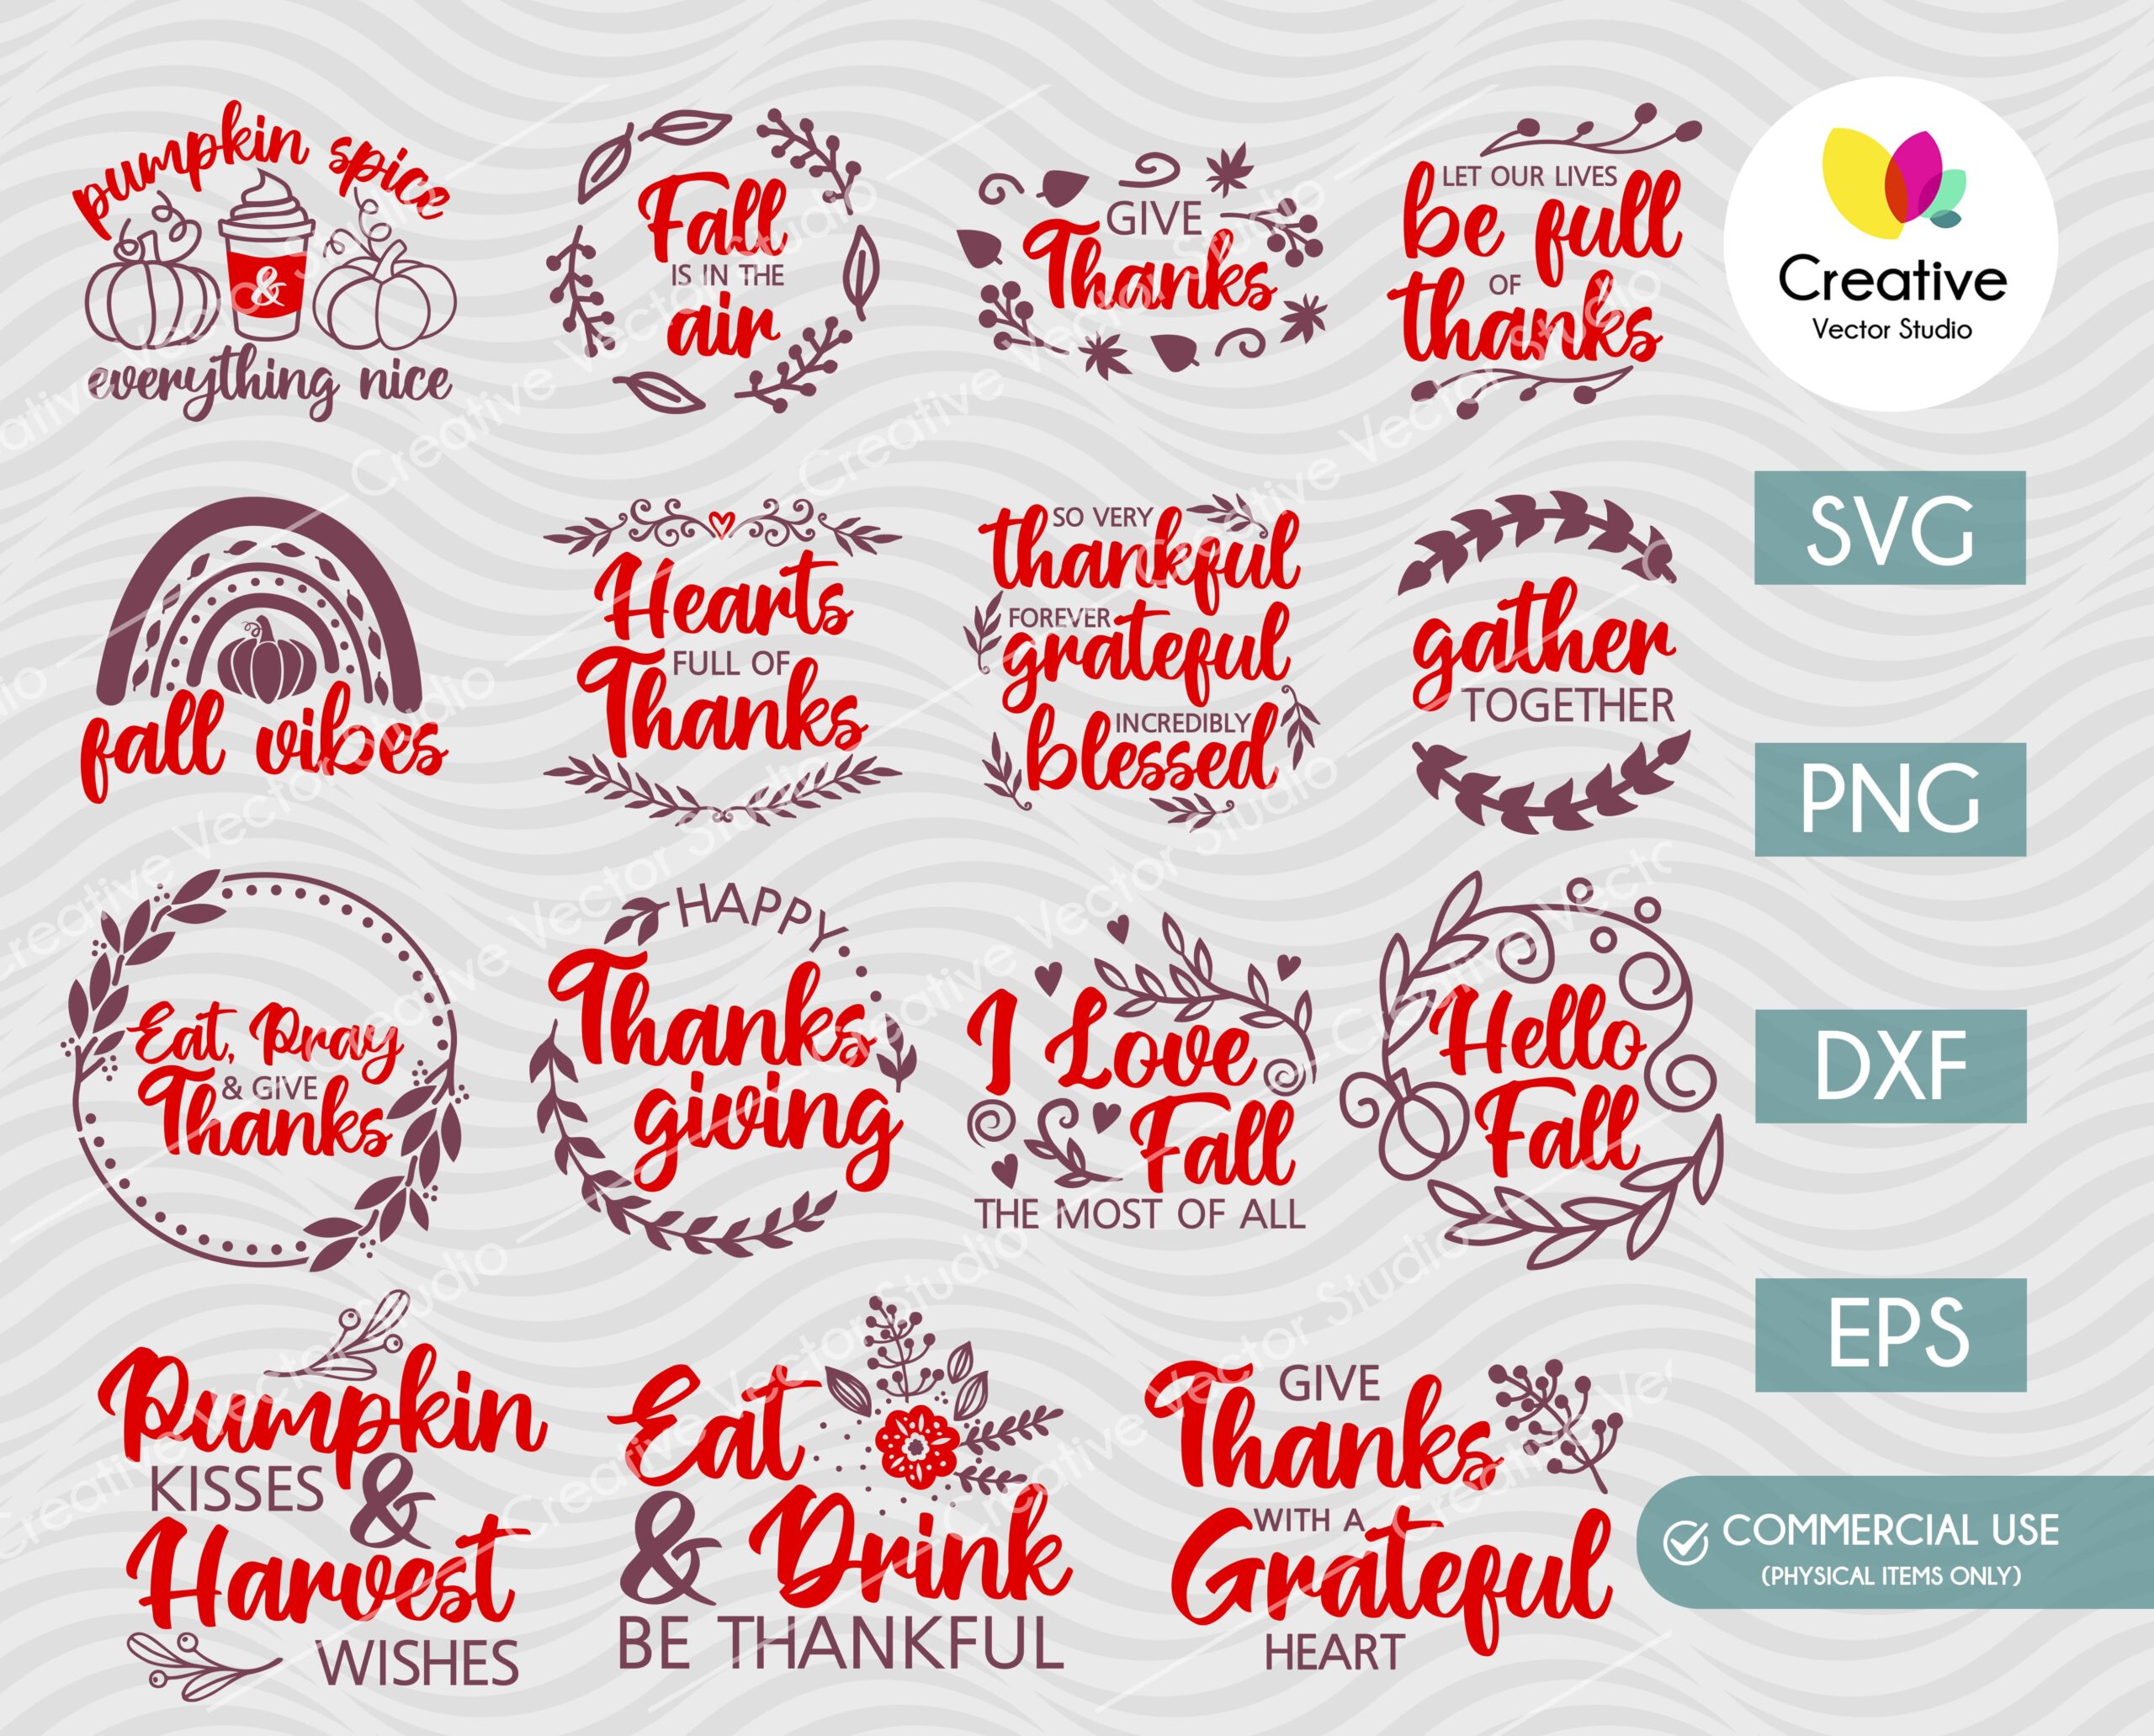 Thanksgiving Quotes SVG Bundle - Creative Vector Studio